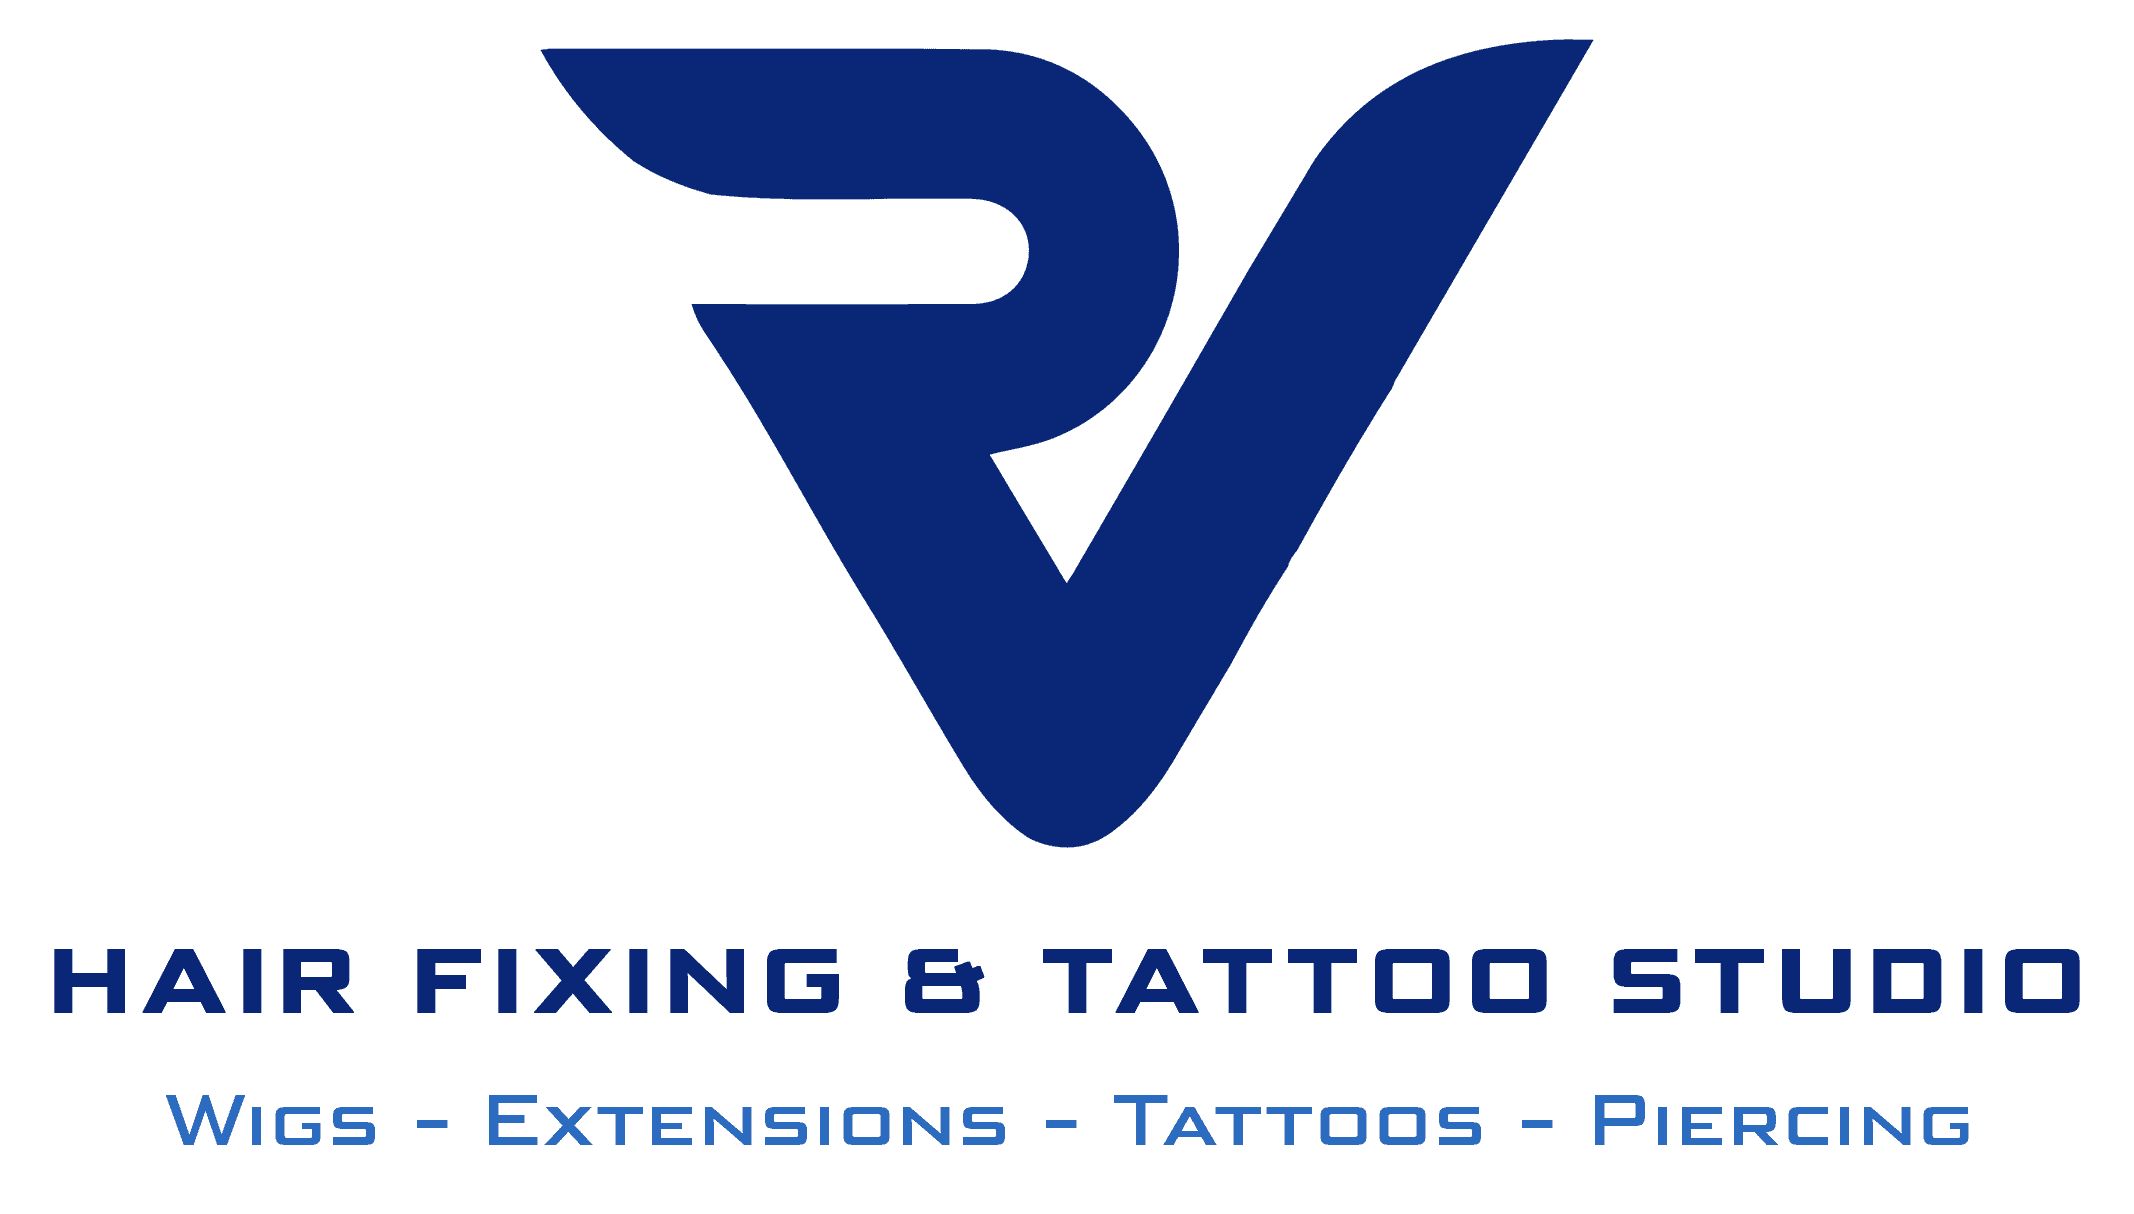 Hair fixing & Tattoo studio